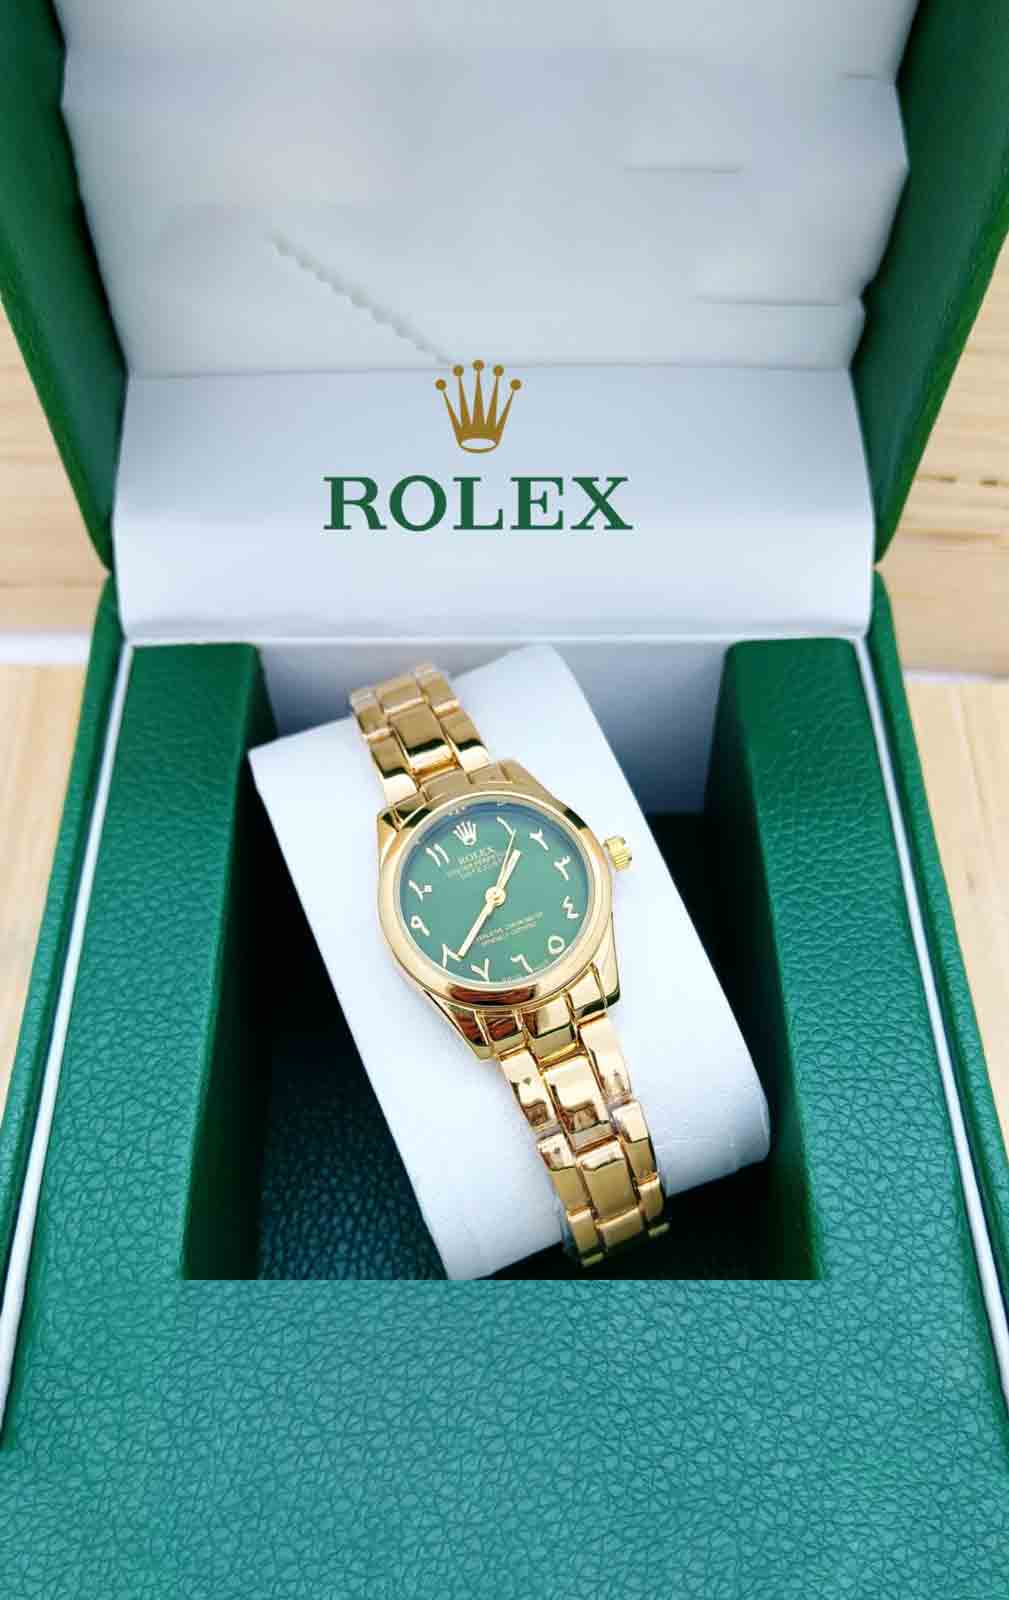 Rolex Steel Strap Analog Watch-RA-10